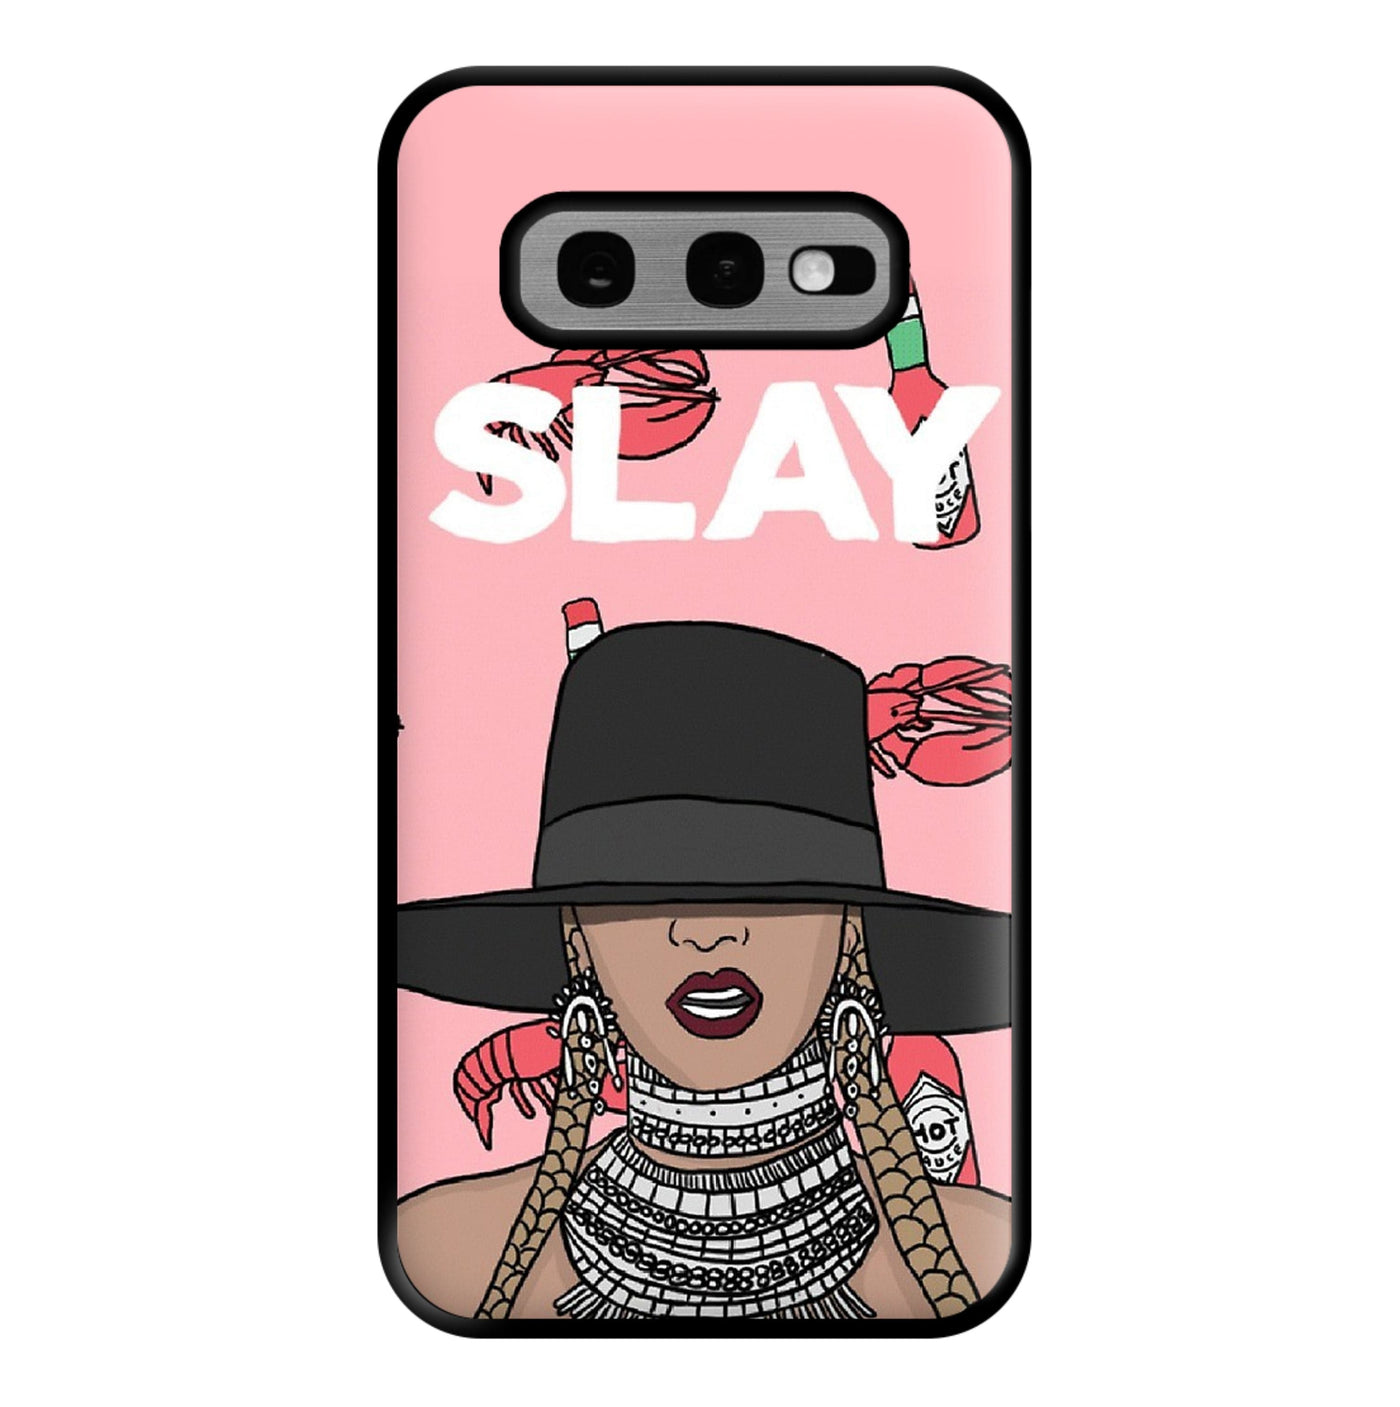 Slay - Beyonce Cartoon Phone Case